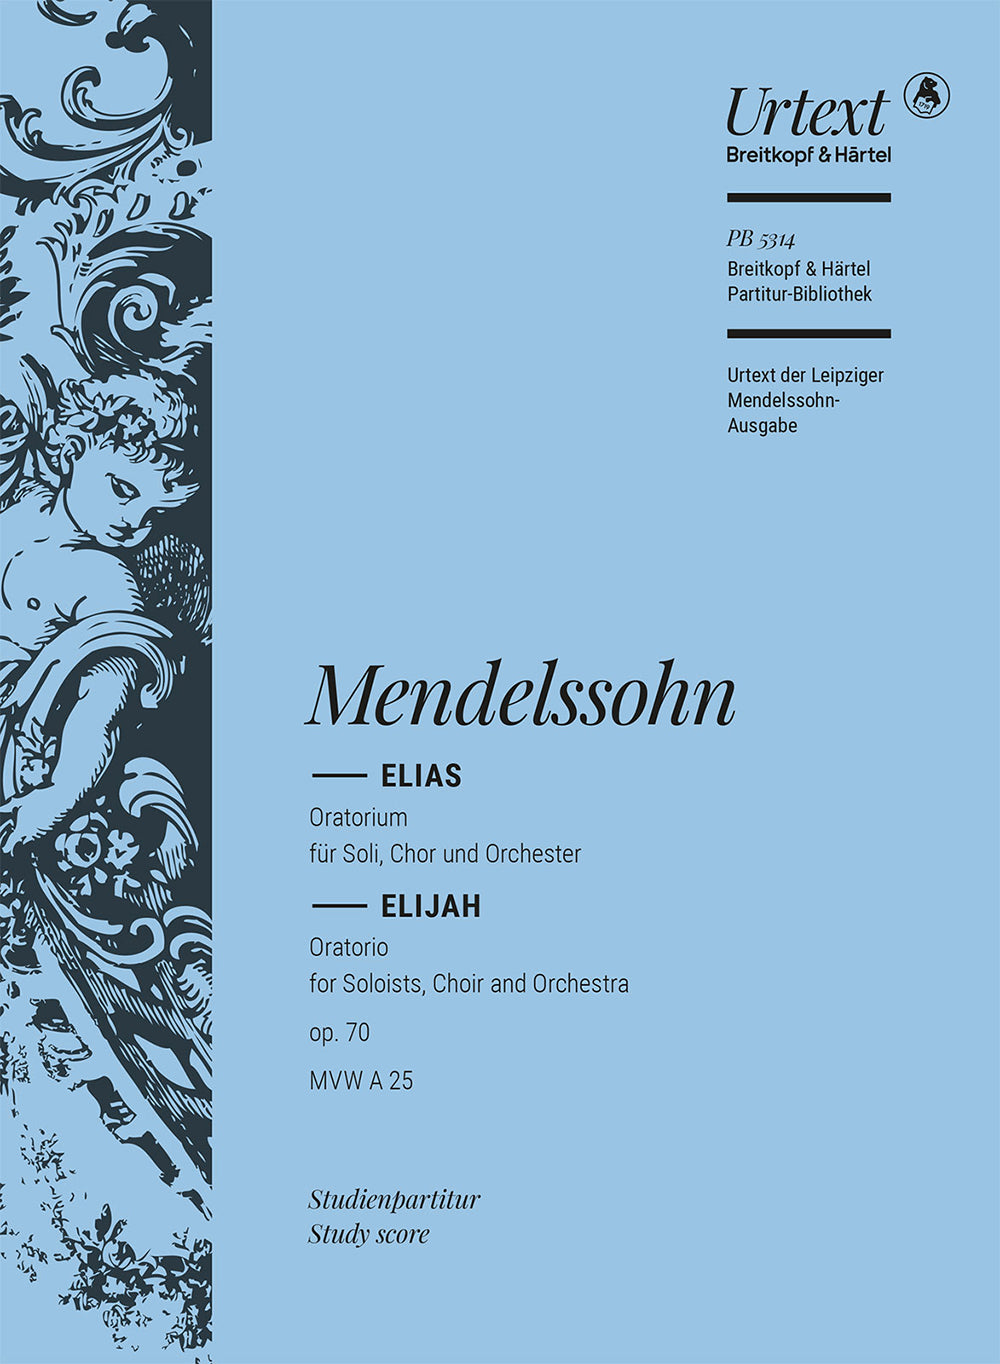 Mendelssohn Elijah MWV A 25 Op. 70